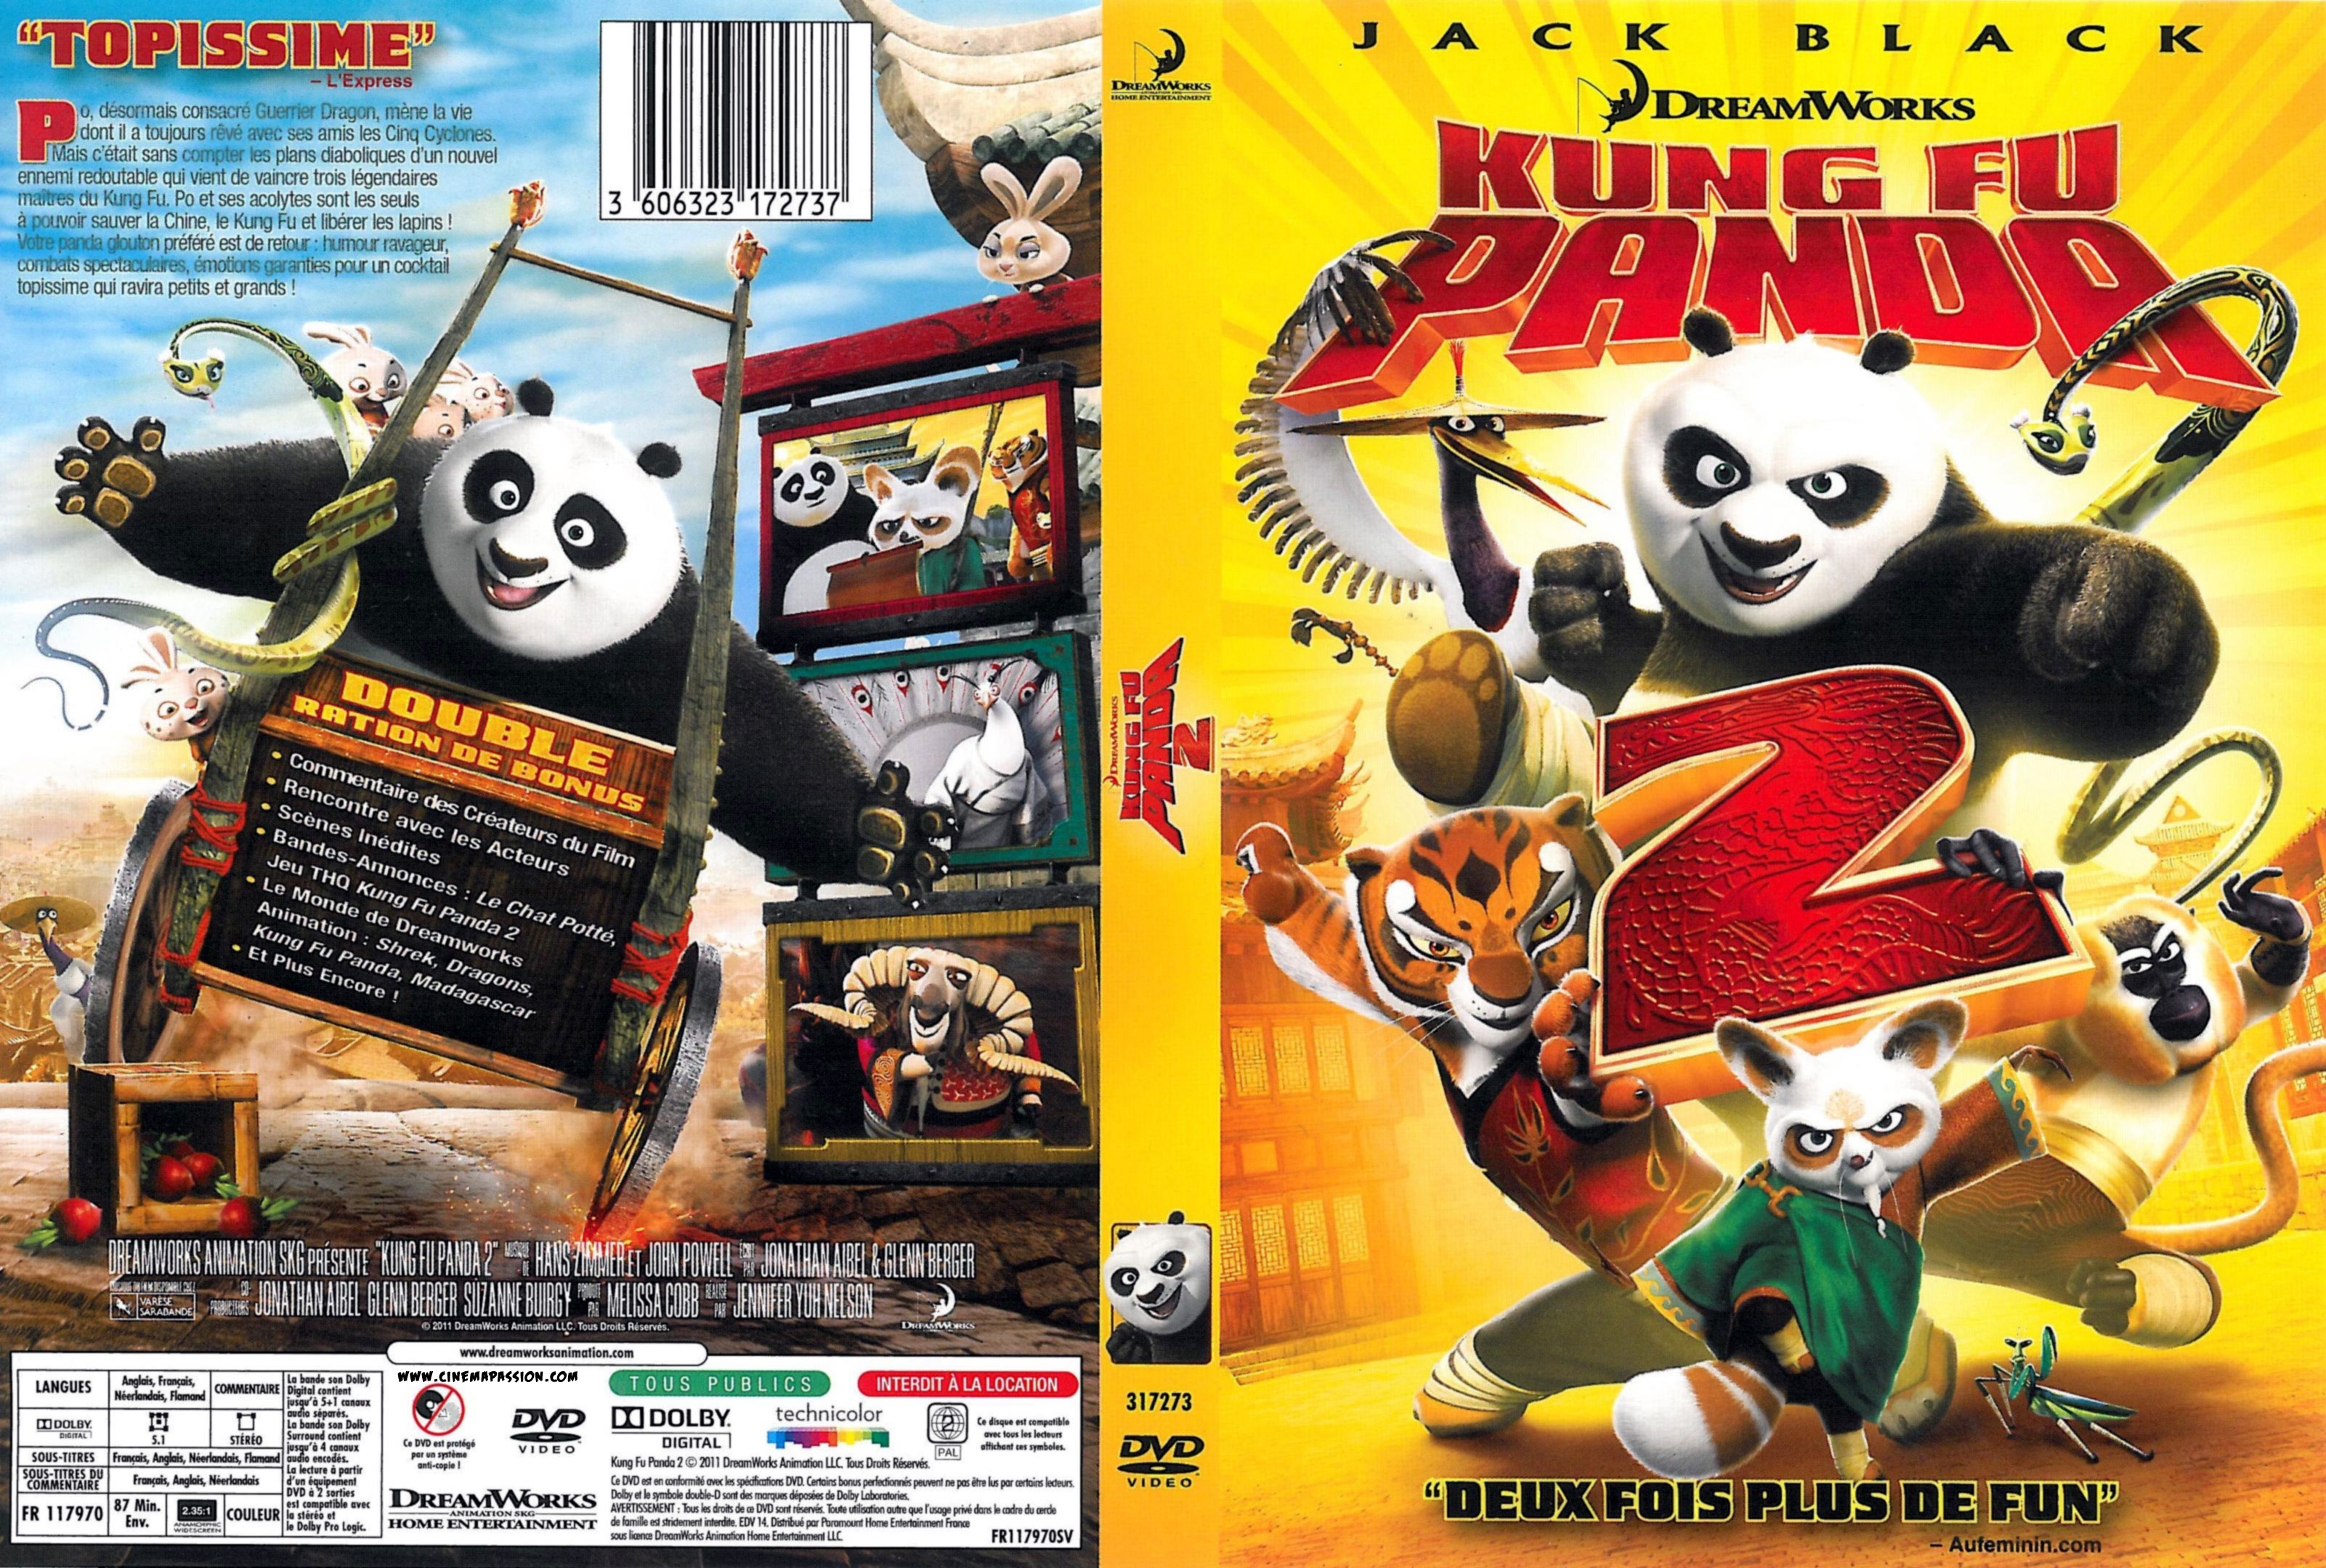 Jaquette DVD Kung fu panda 2